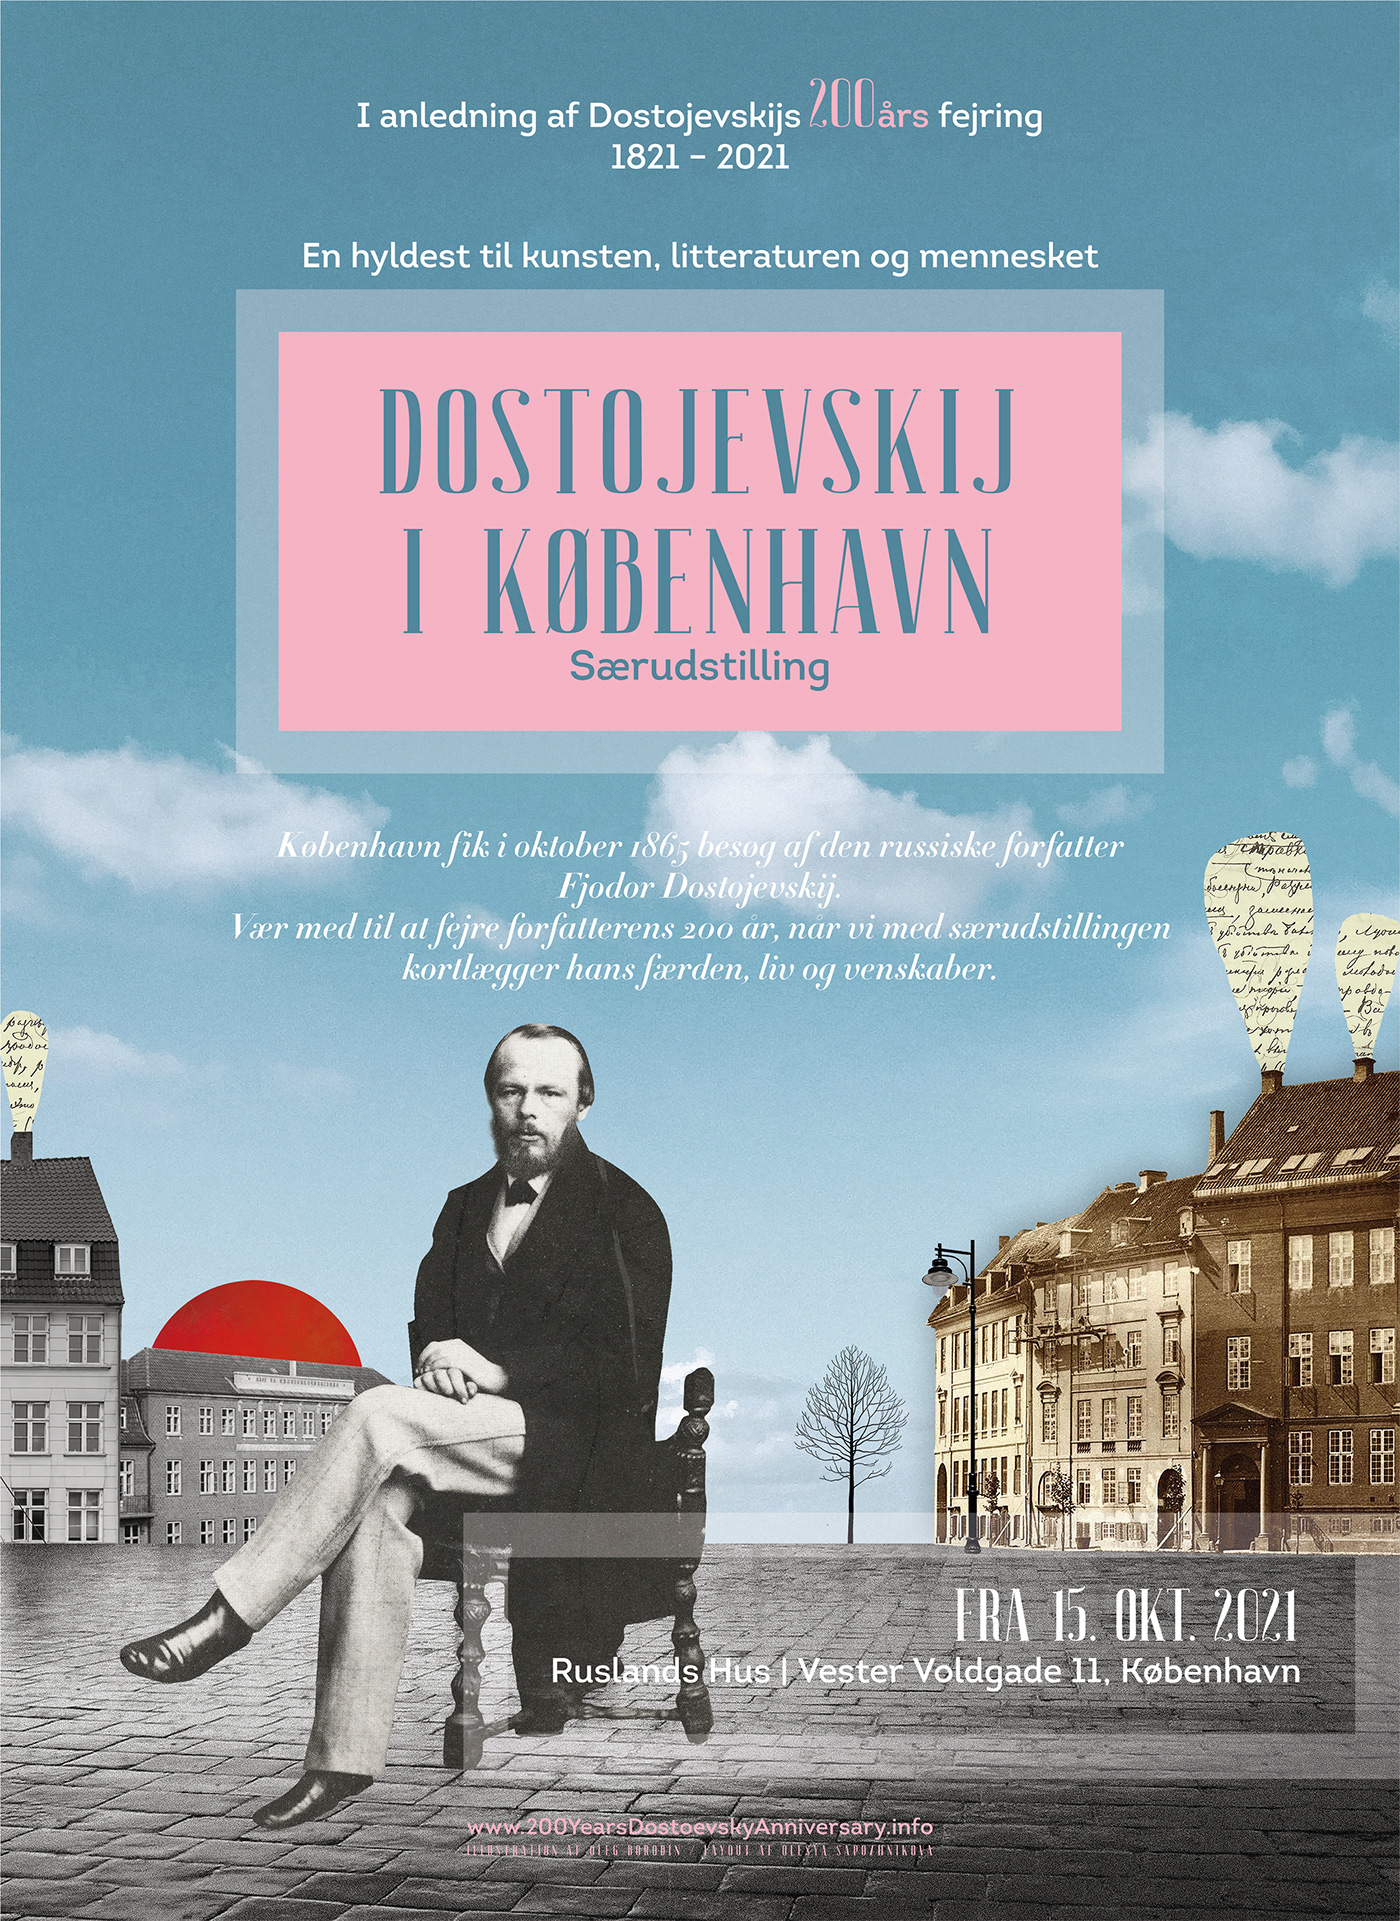 Dostoevsky history Layout literature newspaper playbill copenhagen denmark достоевский